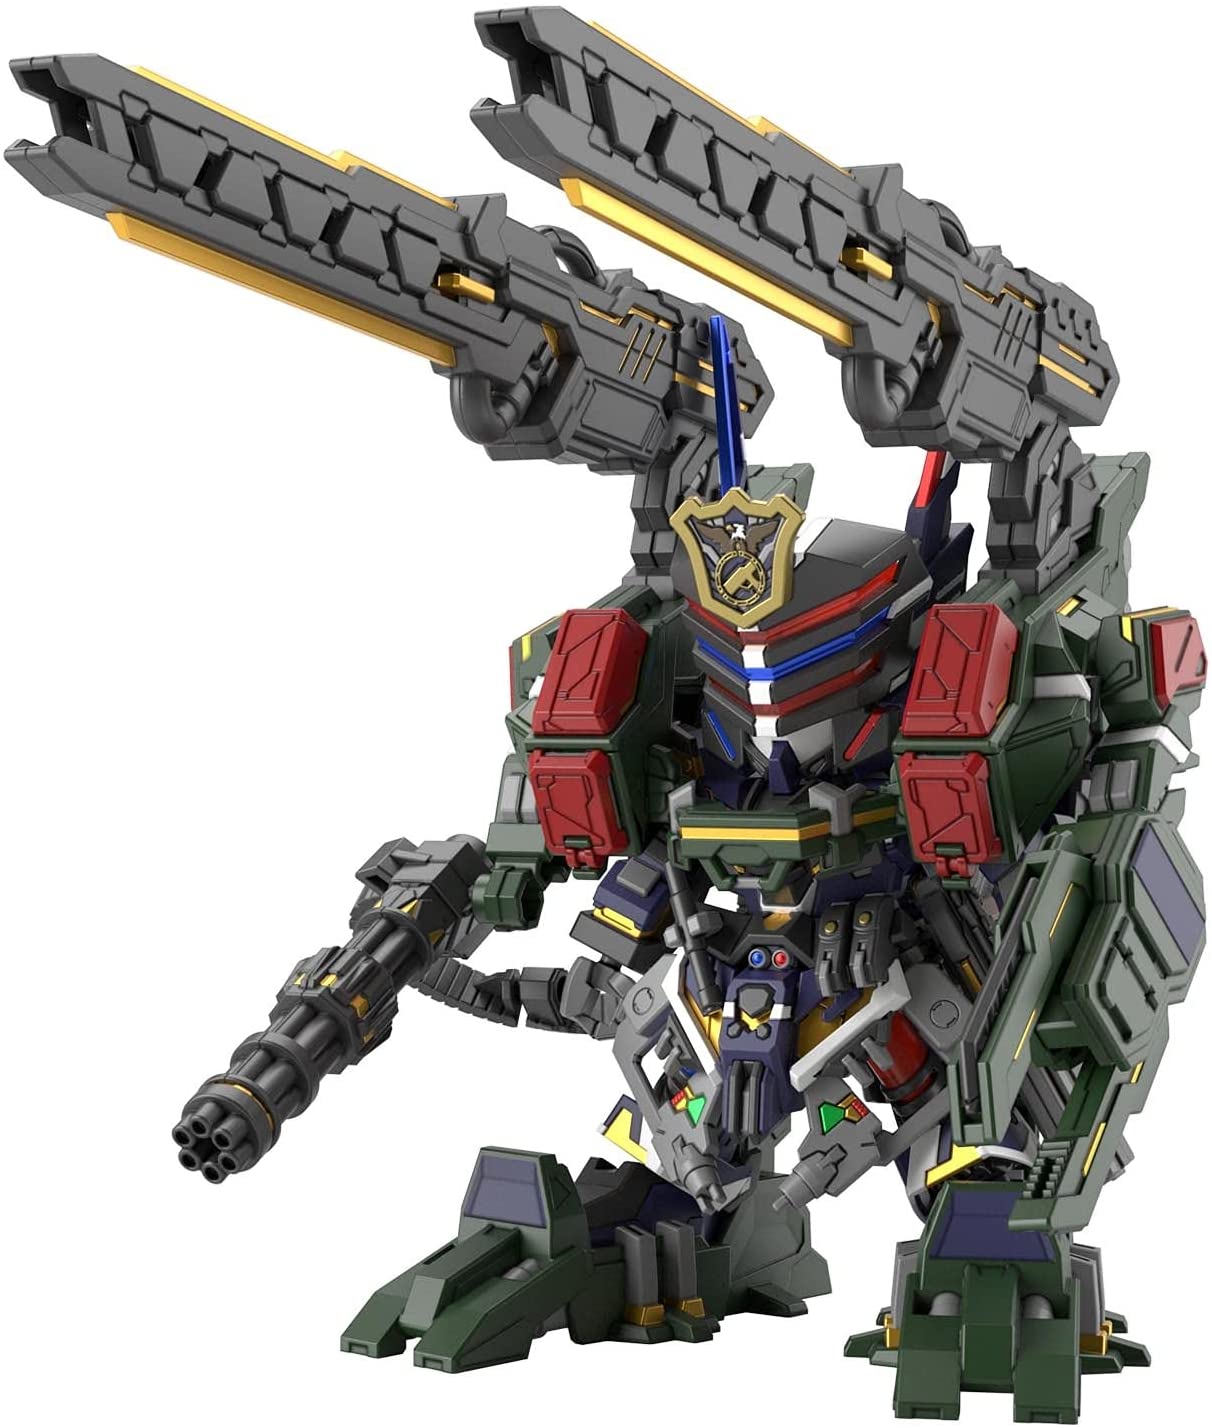 [31st JAN 2022] SDW Heroes Sergeant Verde Buster Gundam DX Set